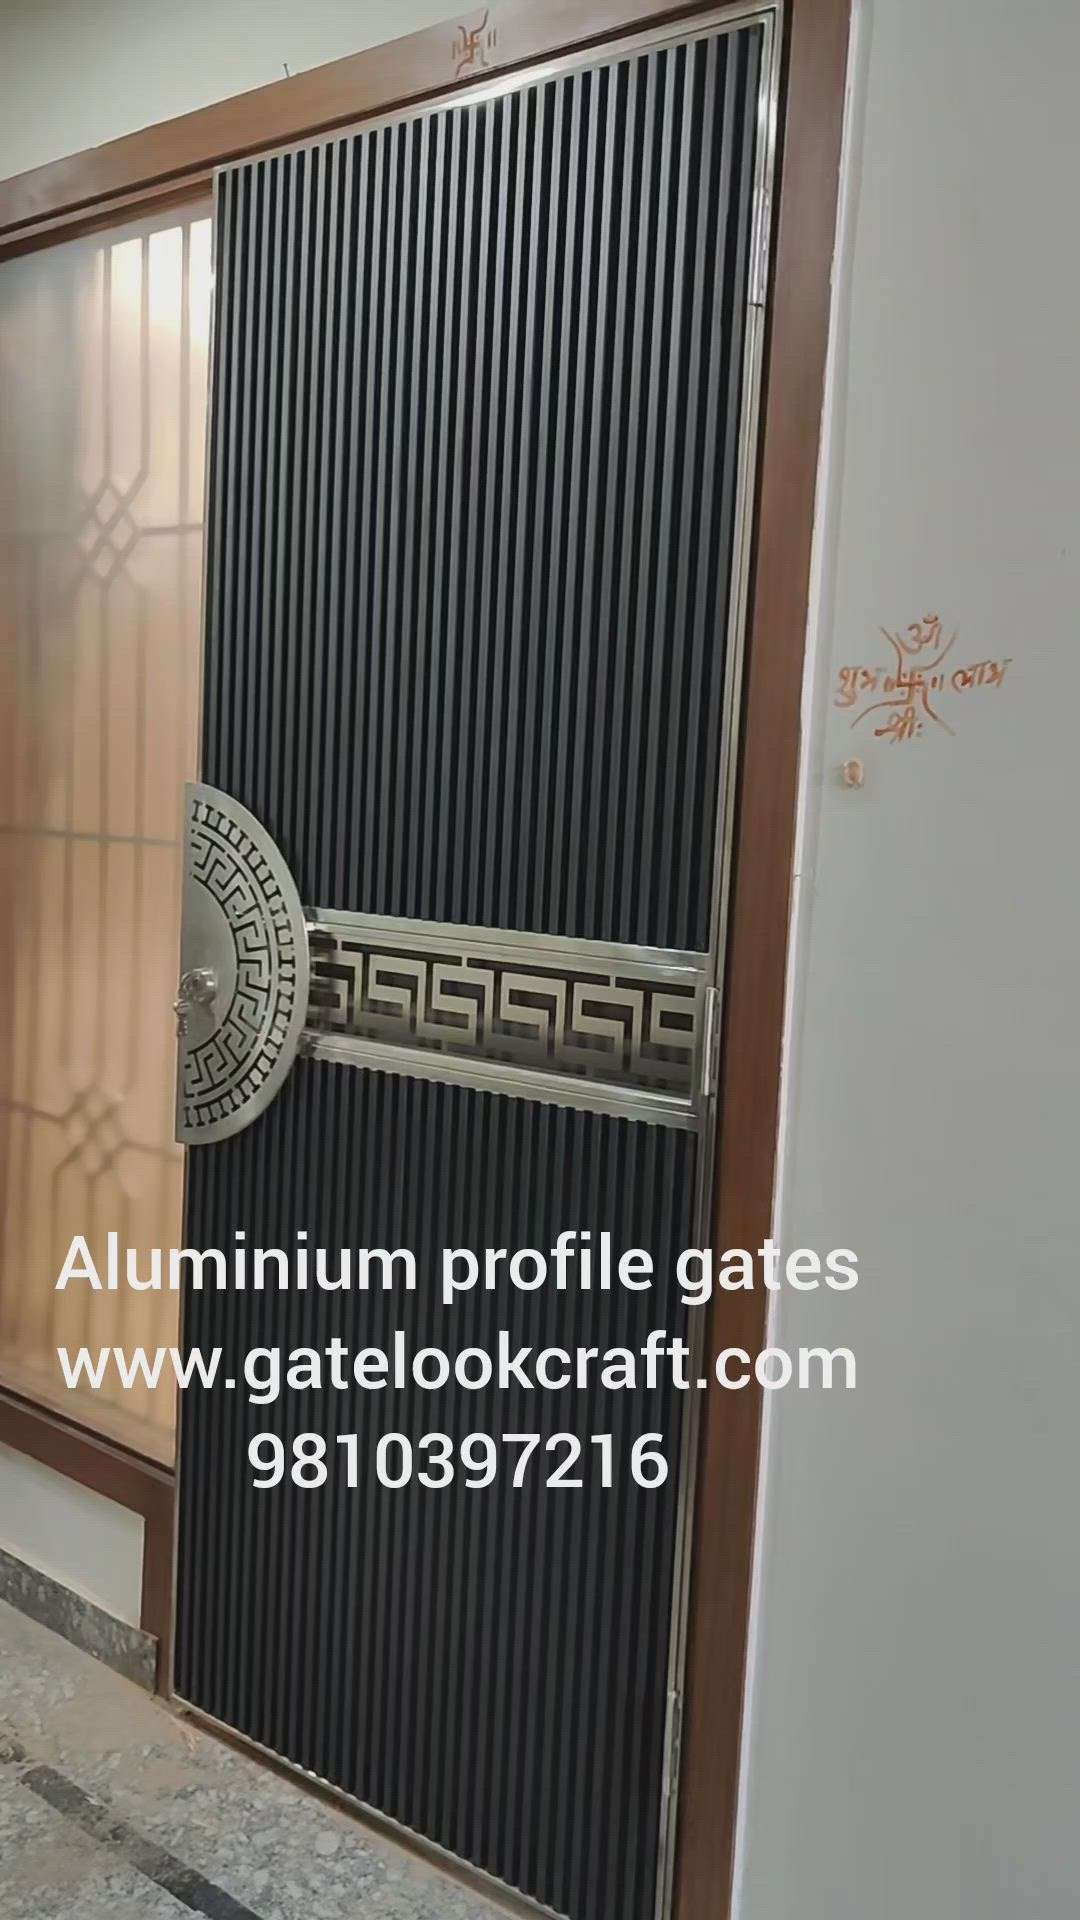 Aluminium profile gates by Hibza sterling interiors pvt ltd manufacture in Delhi #gatelookcraft
#gate #maingates #aluminiumprofilegates
#fancygate #desinggates #profilegates #securitygate